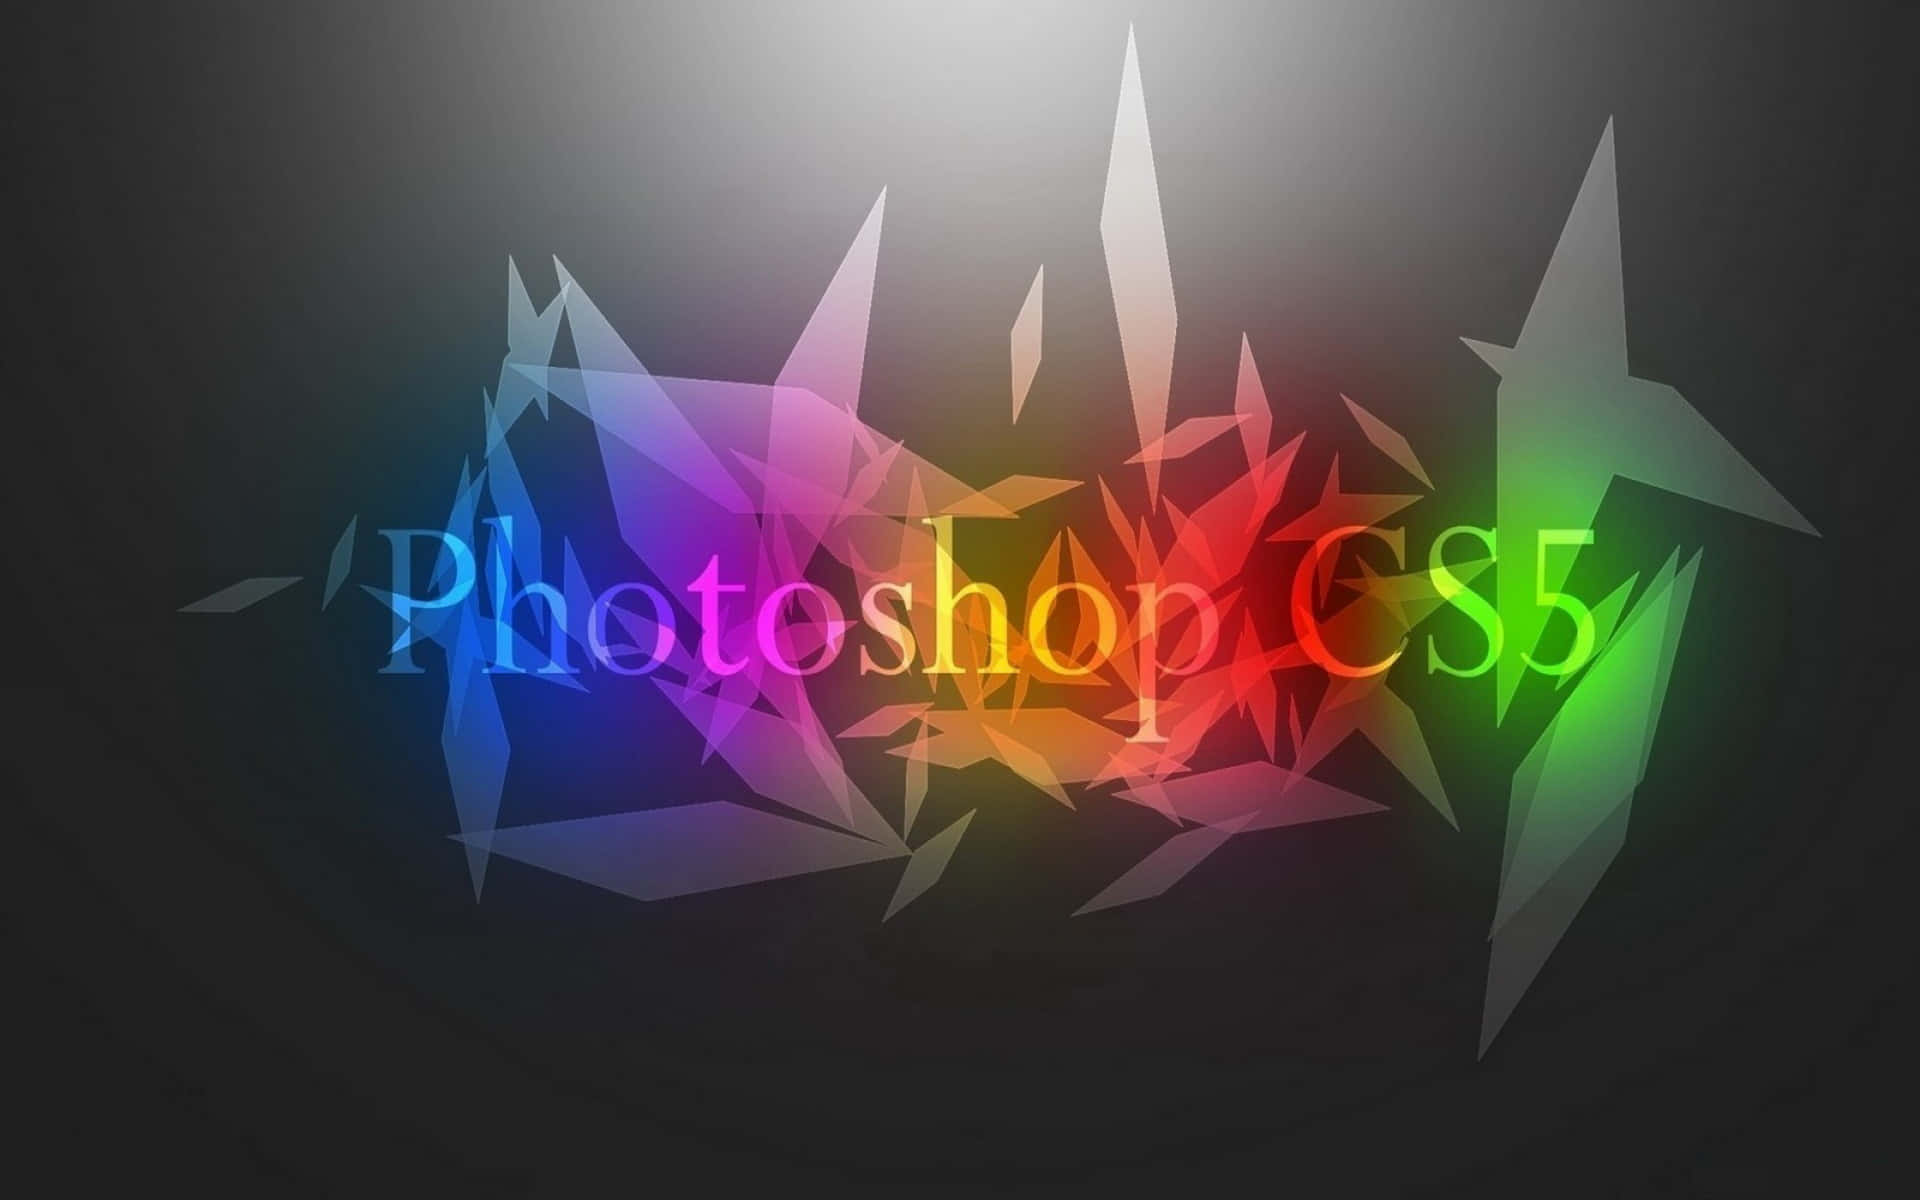 Photoshopcs5 Mehrfarbiges Logo Wallpaper